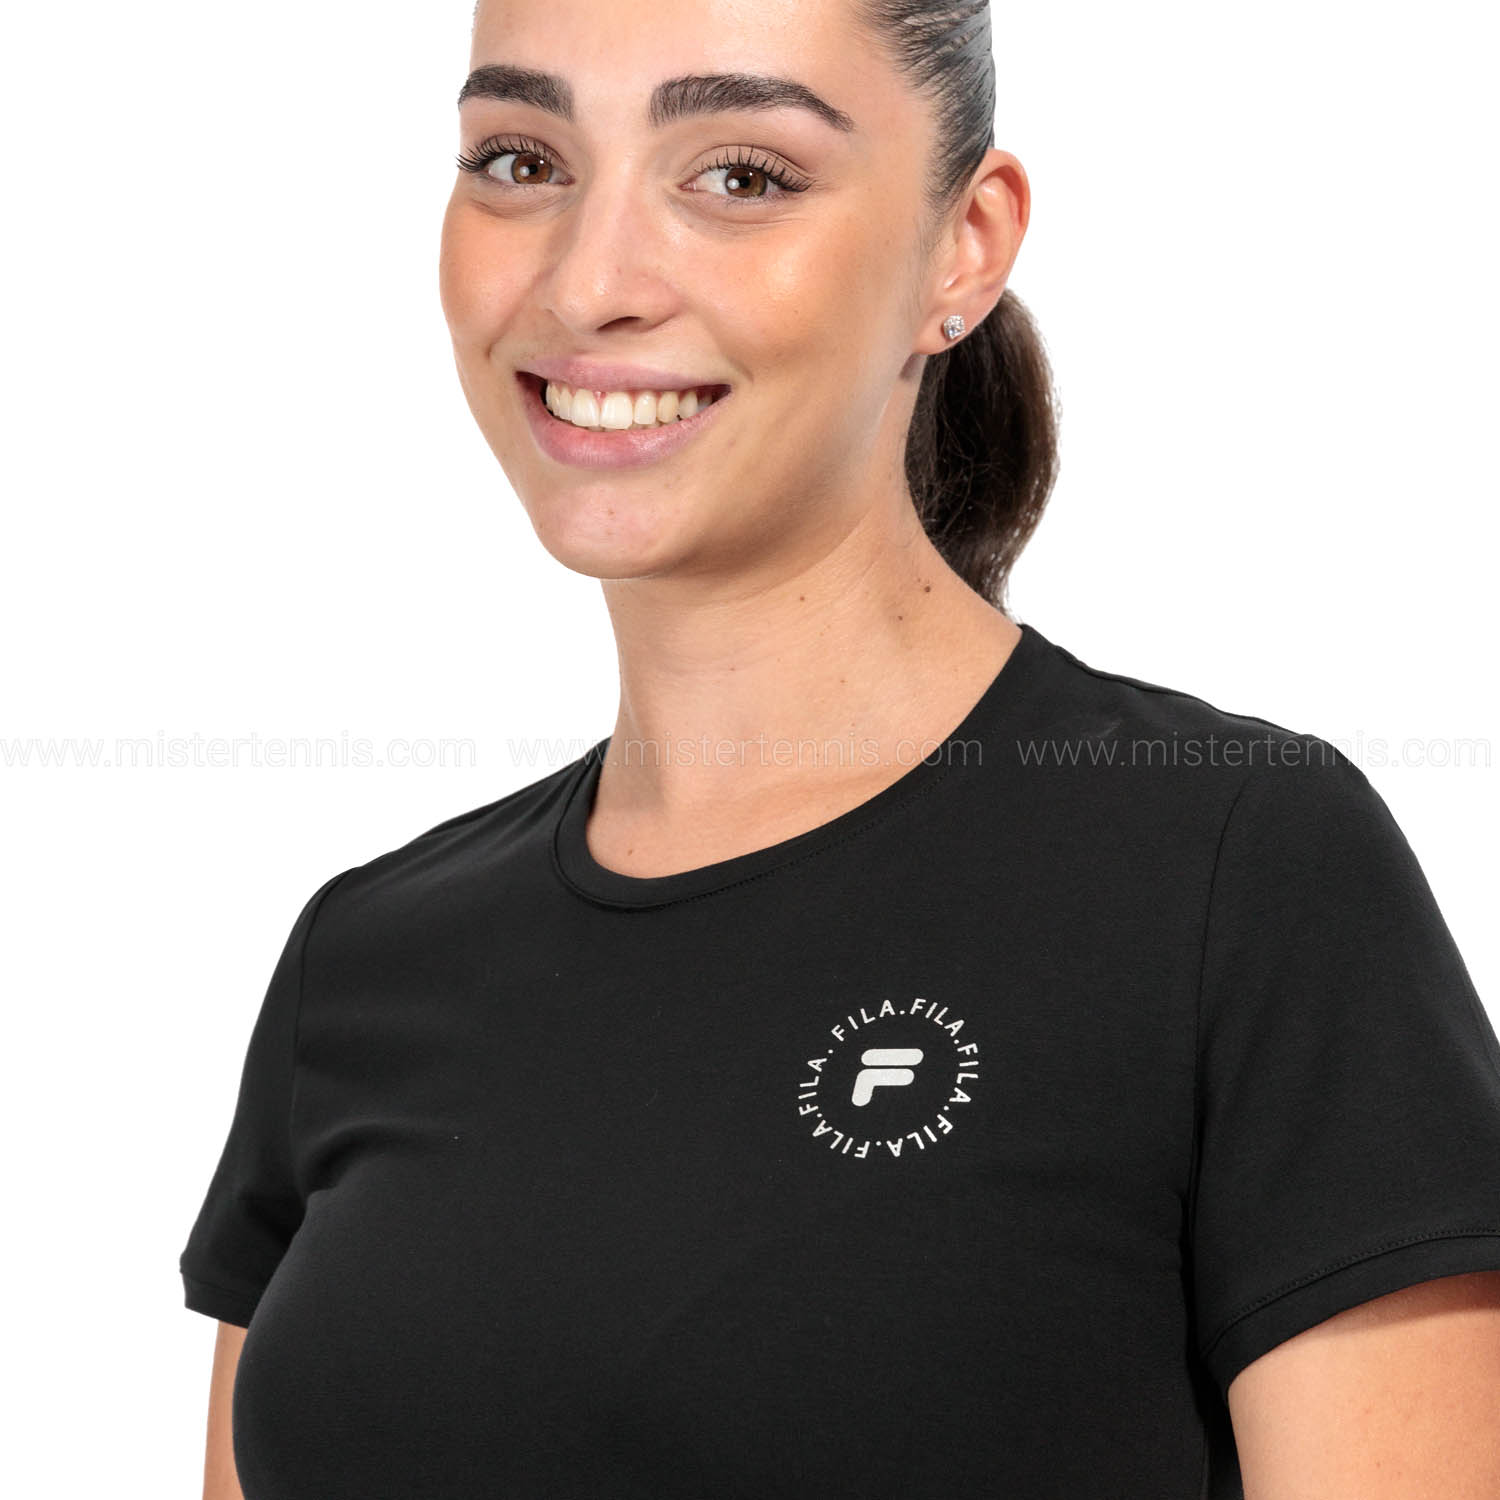 Fila Mara Camiseta - Black